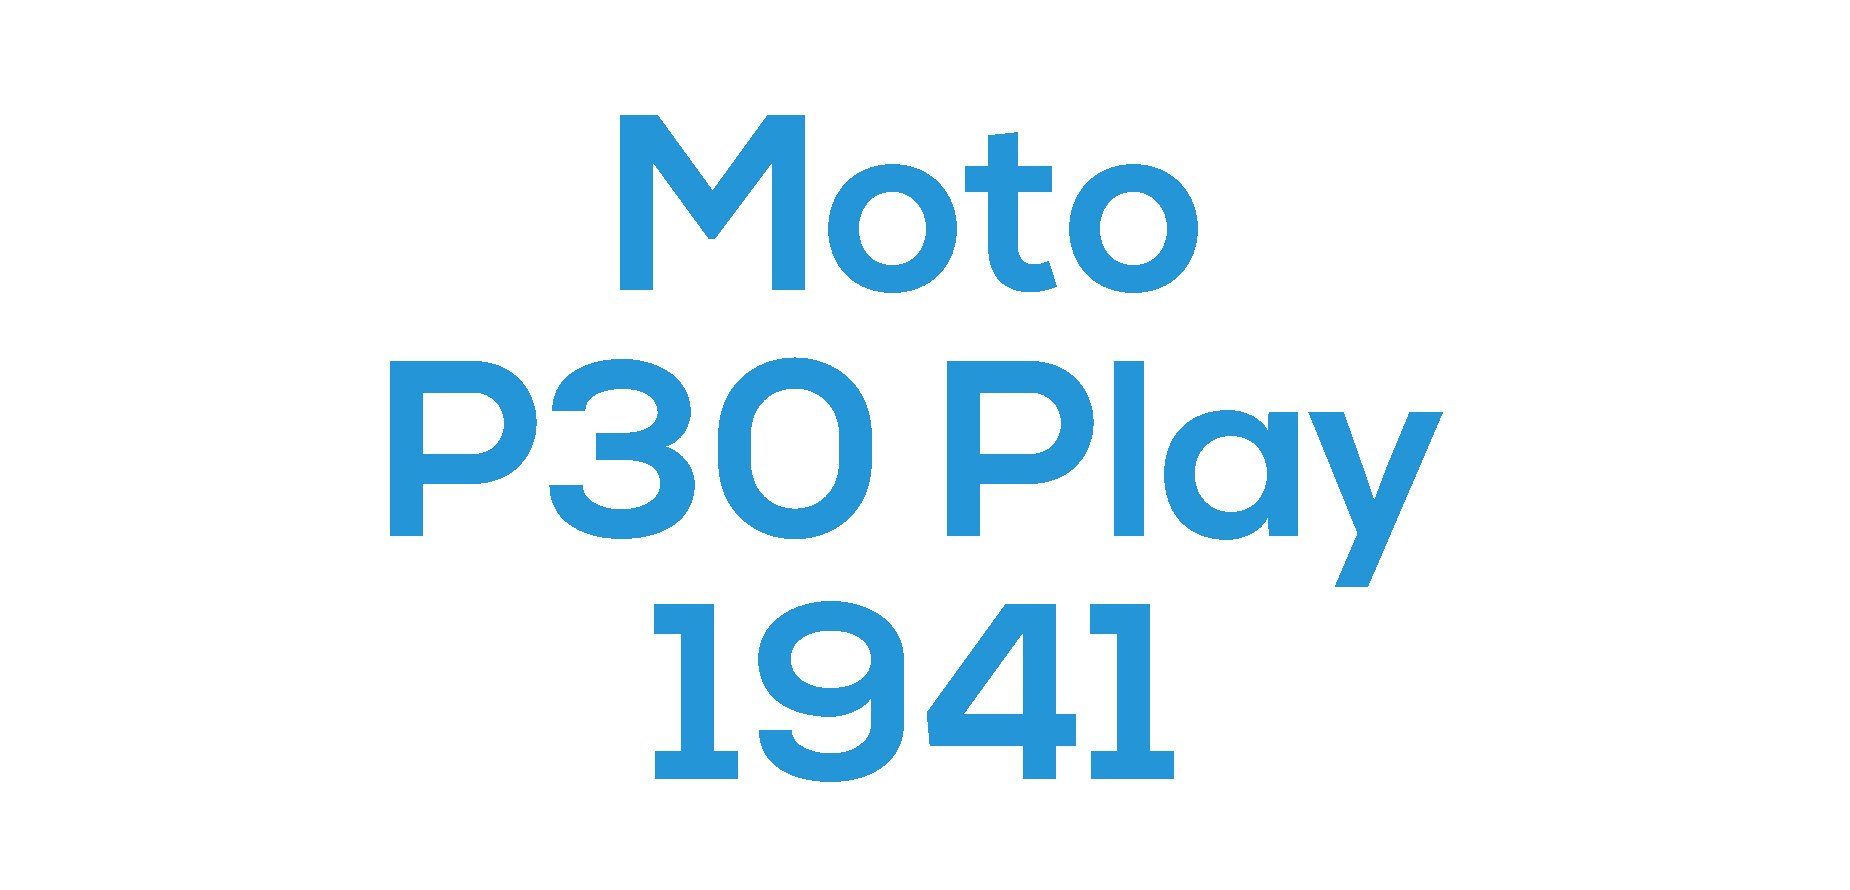 P30 Play (XT1941)